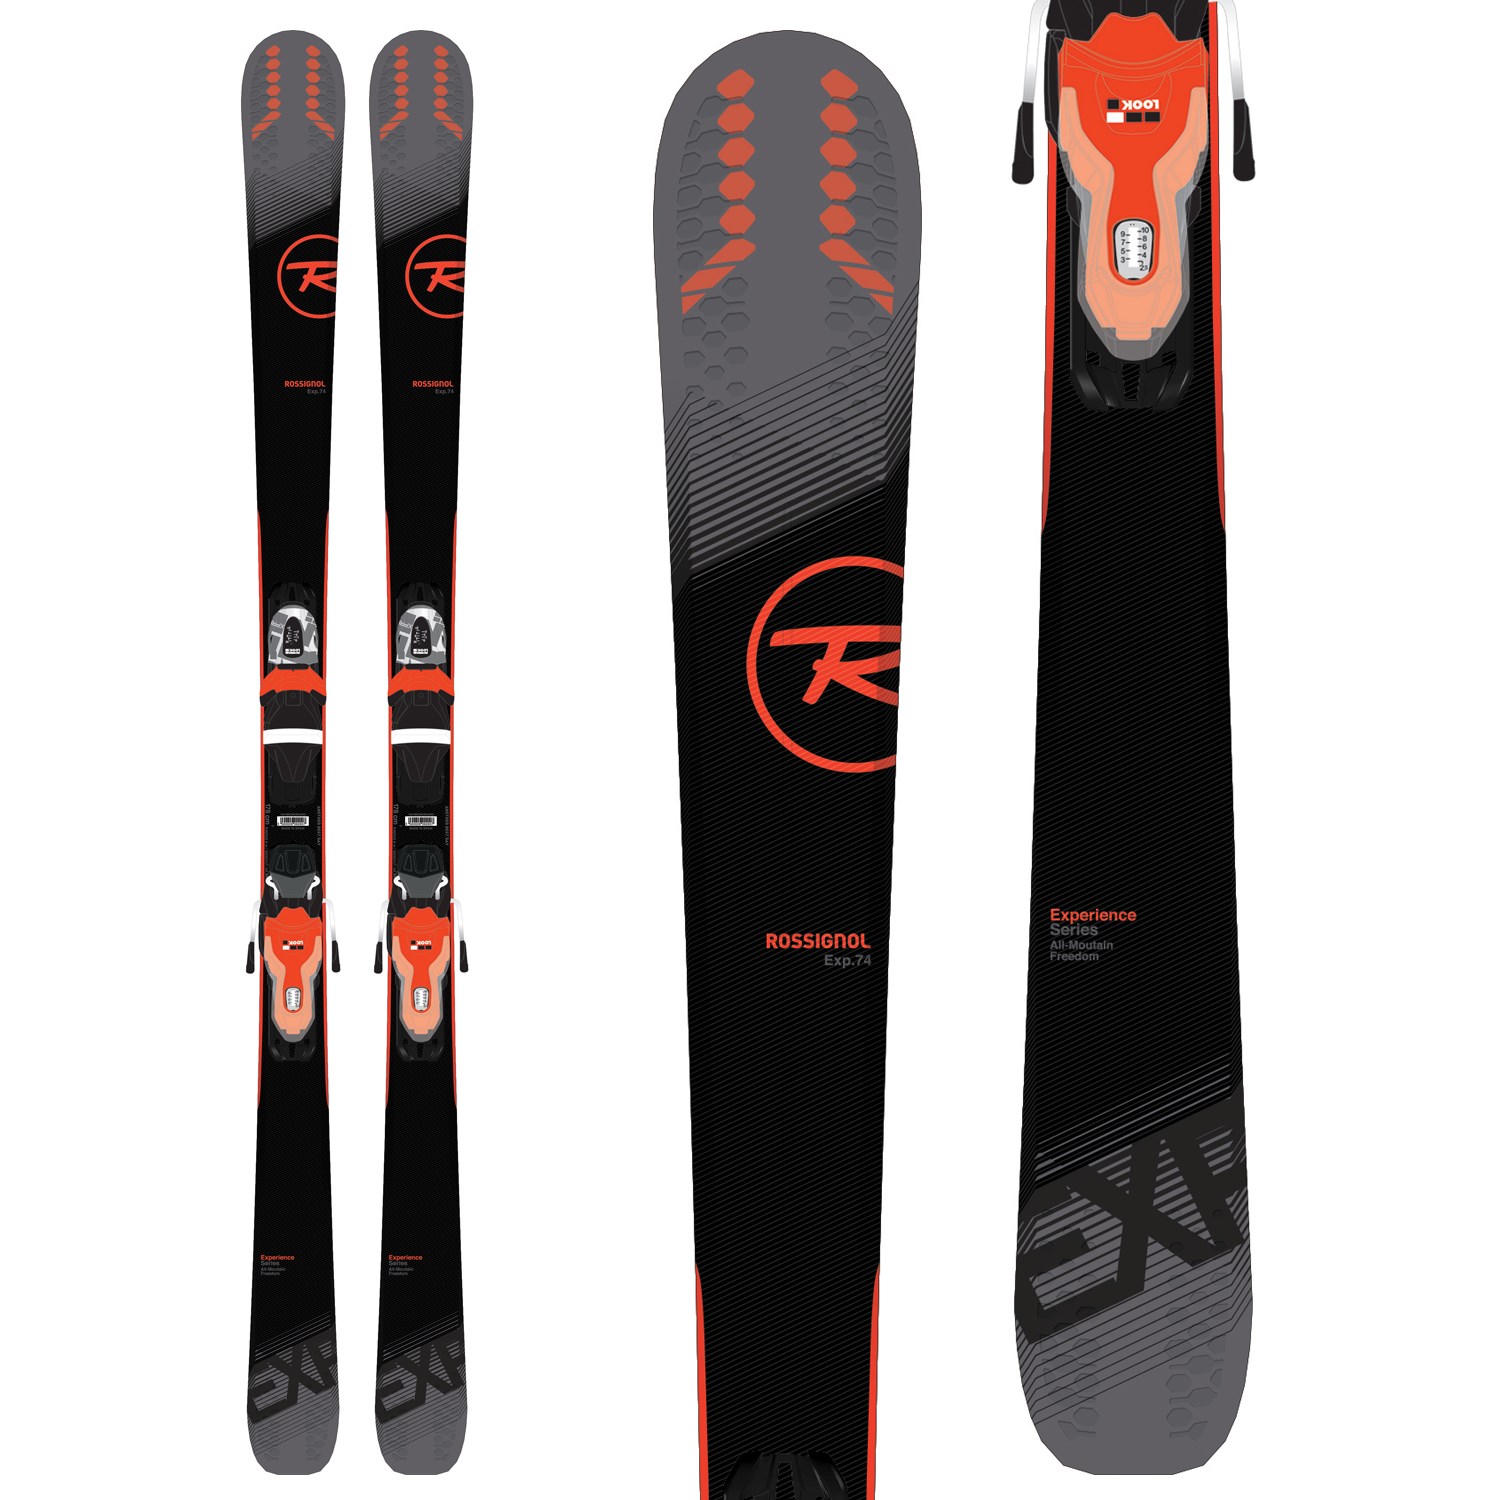 2020 Rossignol Experience 74 Womens Skis w/Xp W 10 Bindings-160 